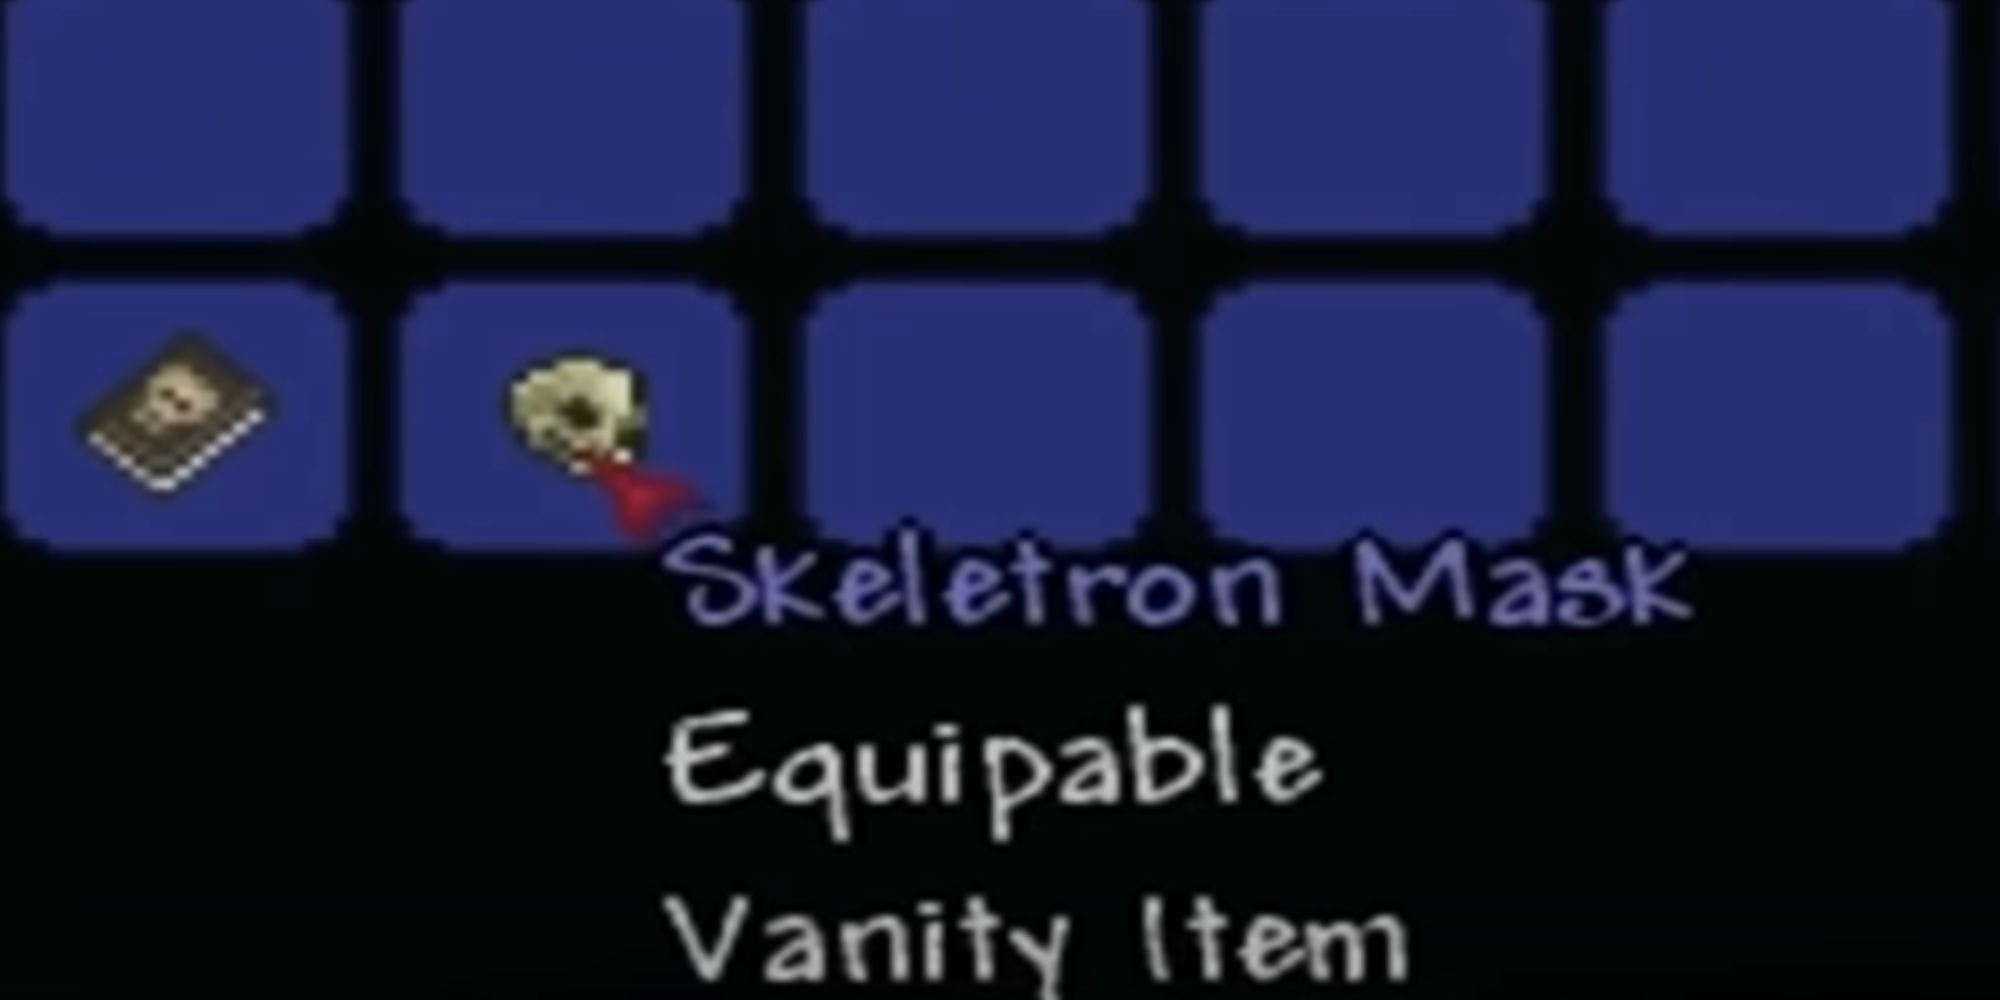 terraria_skeletron_mask_inside_inventory